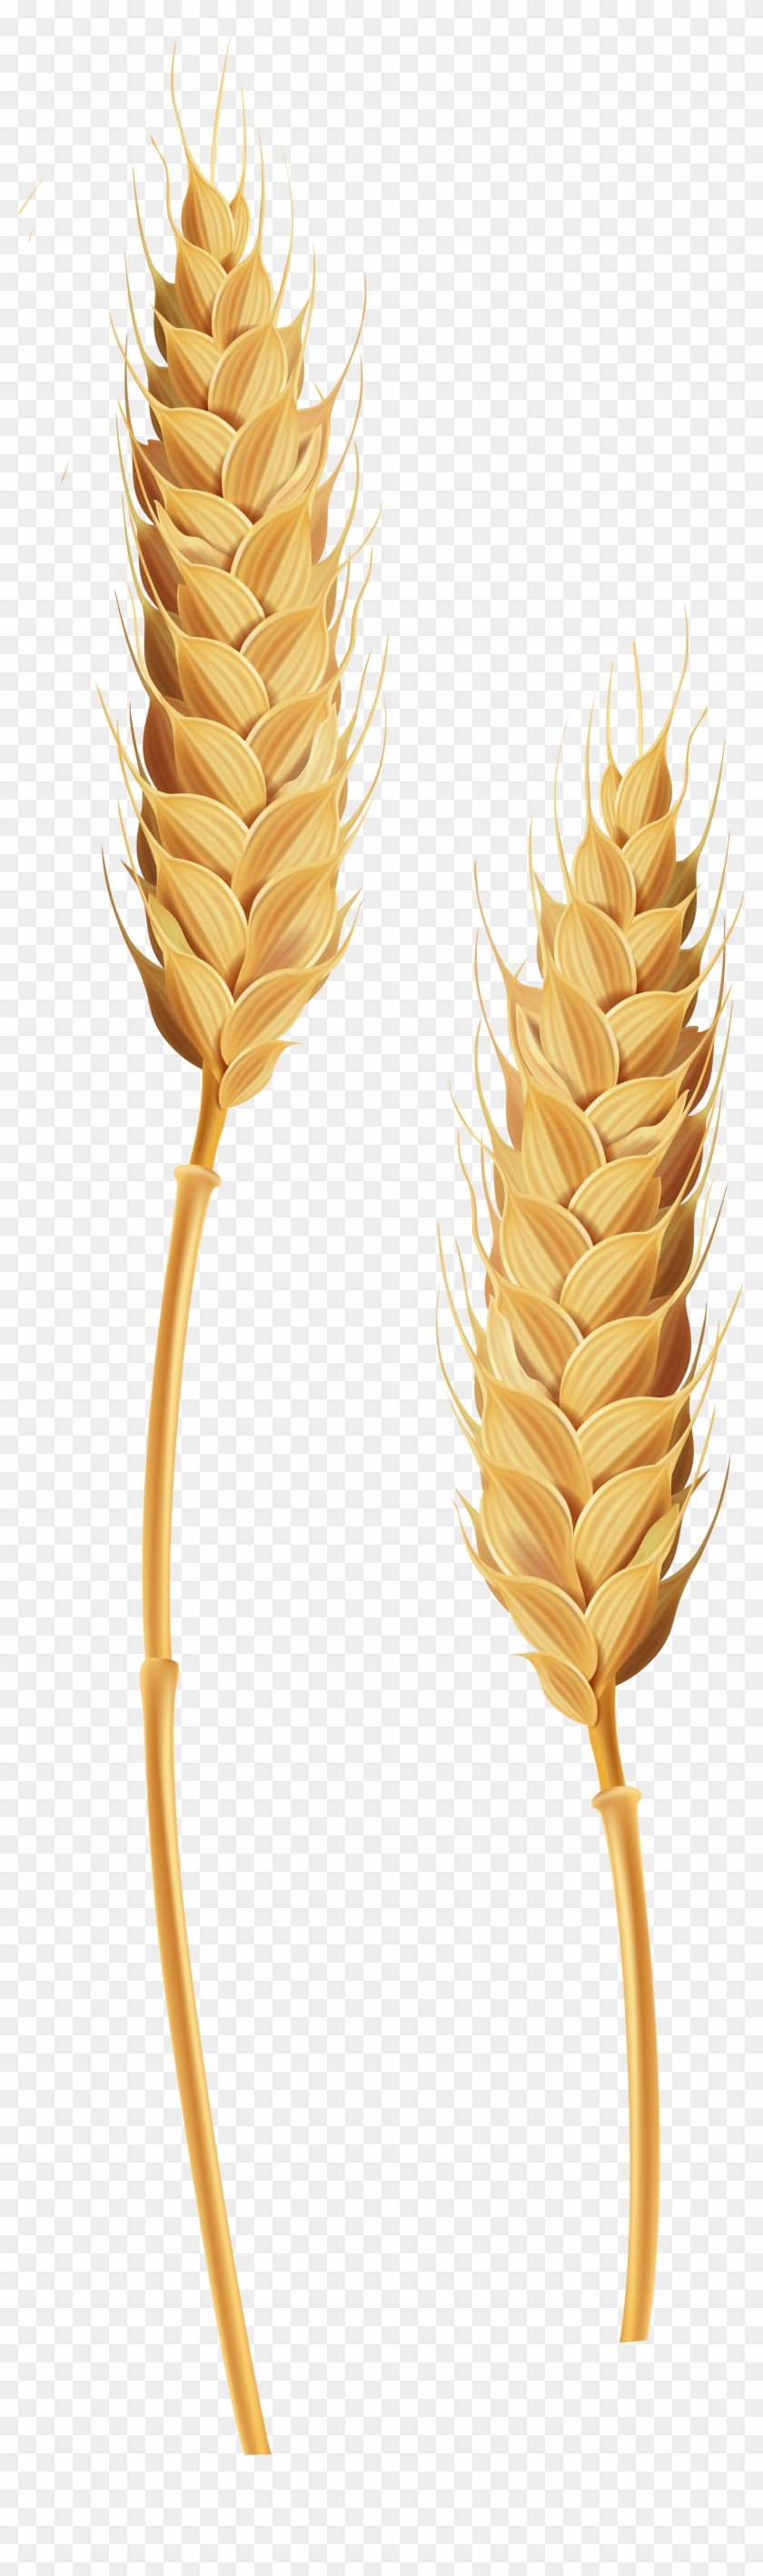 Wheat Stalks Transparent Clip Art Image - Wheat Transparent #732626